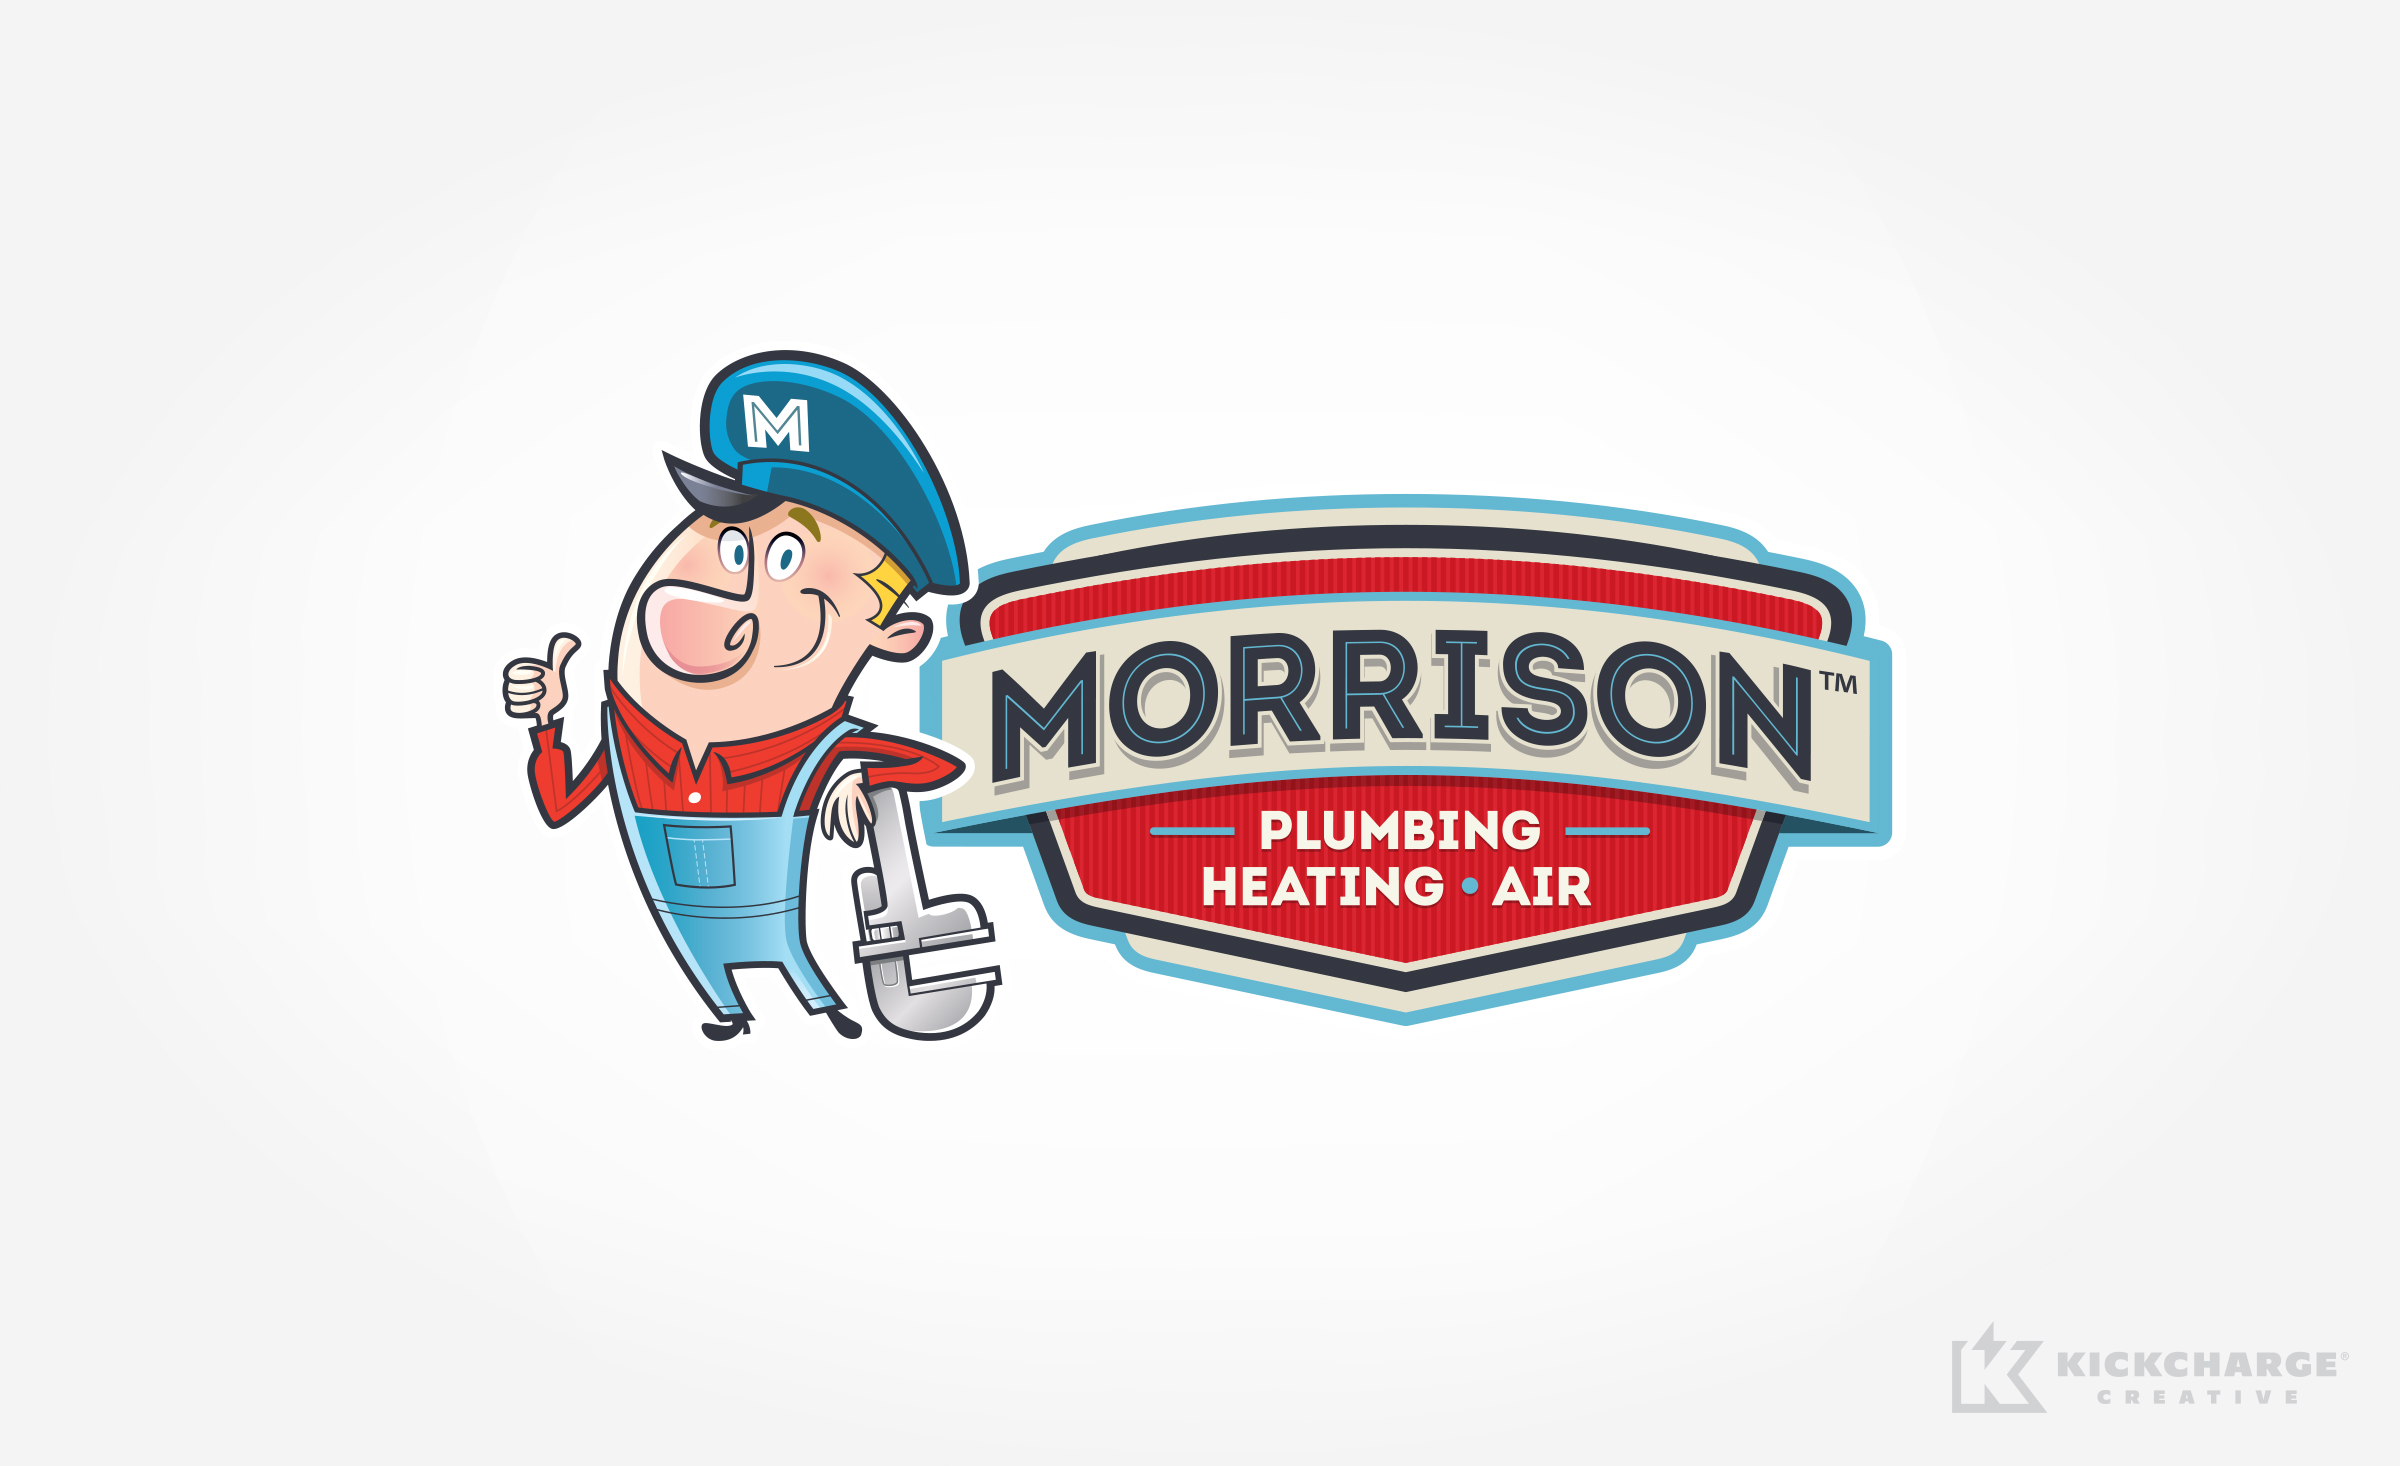 hvac and plumbing logo for Morrison Plumbing, Heating & Air